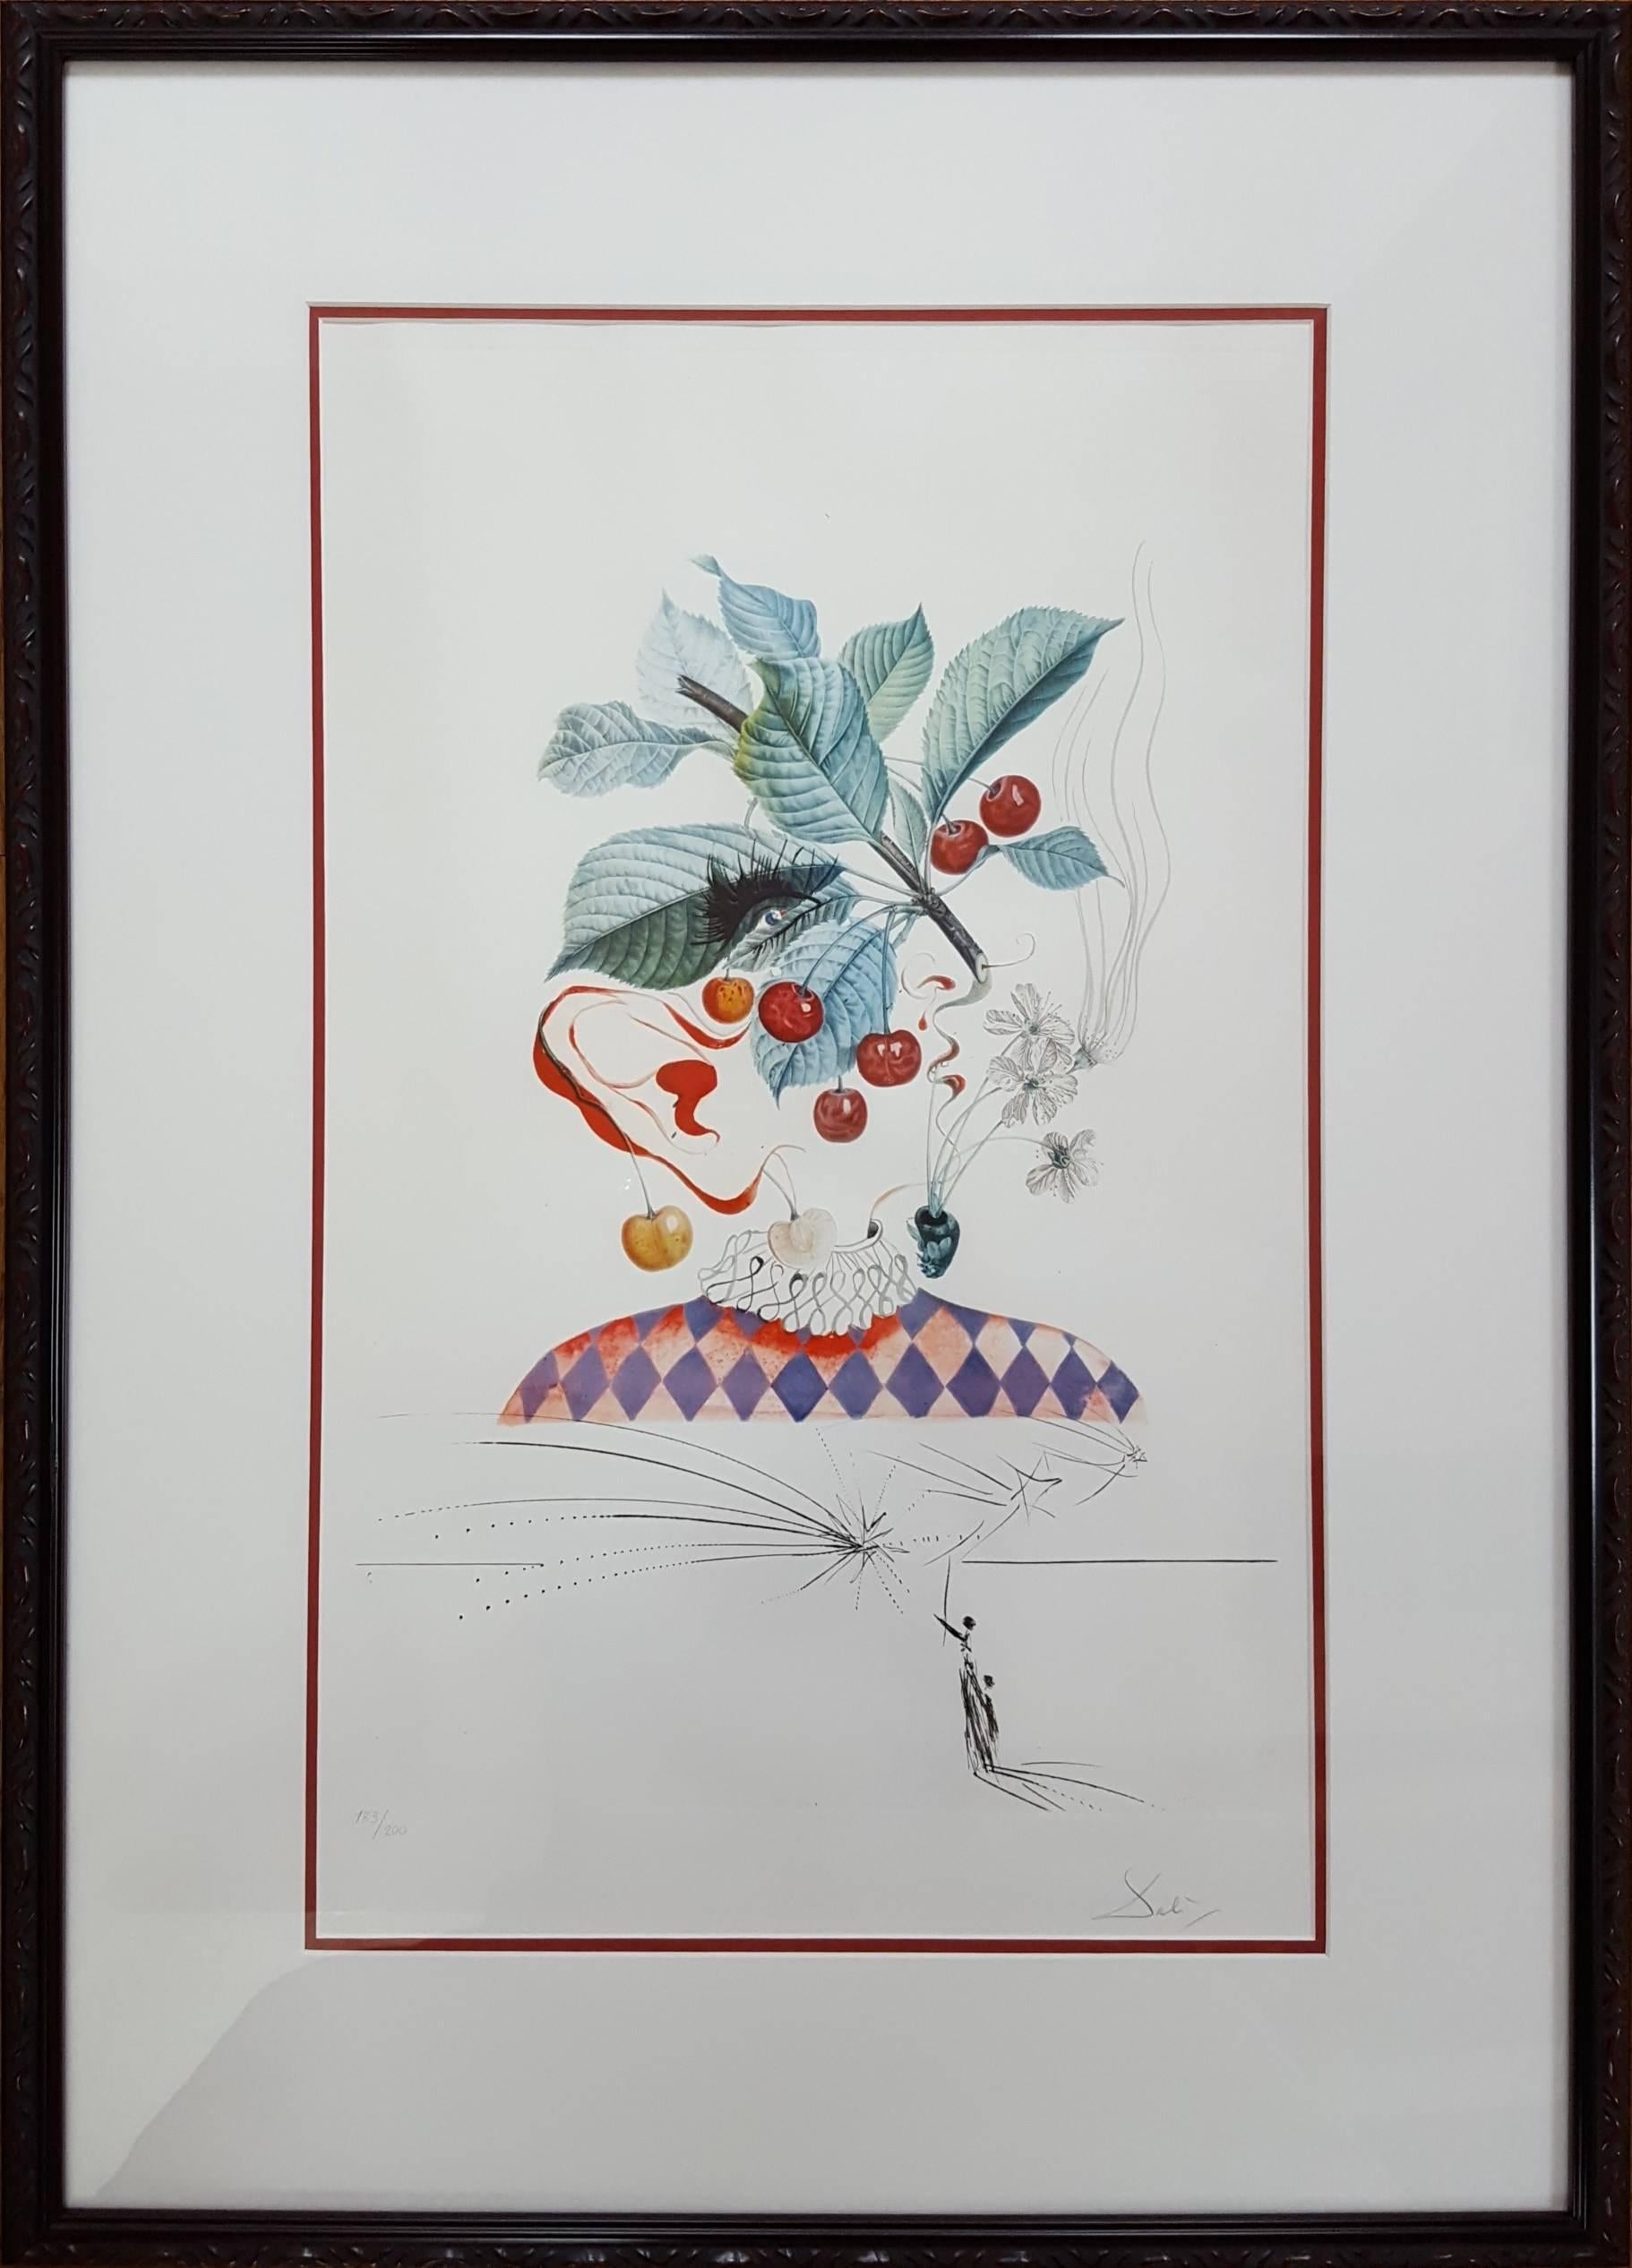 Cerises Pierrot (Cherries) - Print by Salvador Dalí